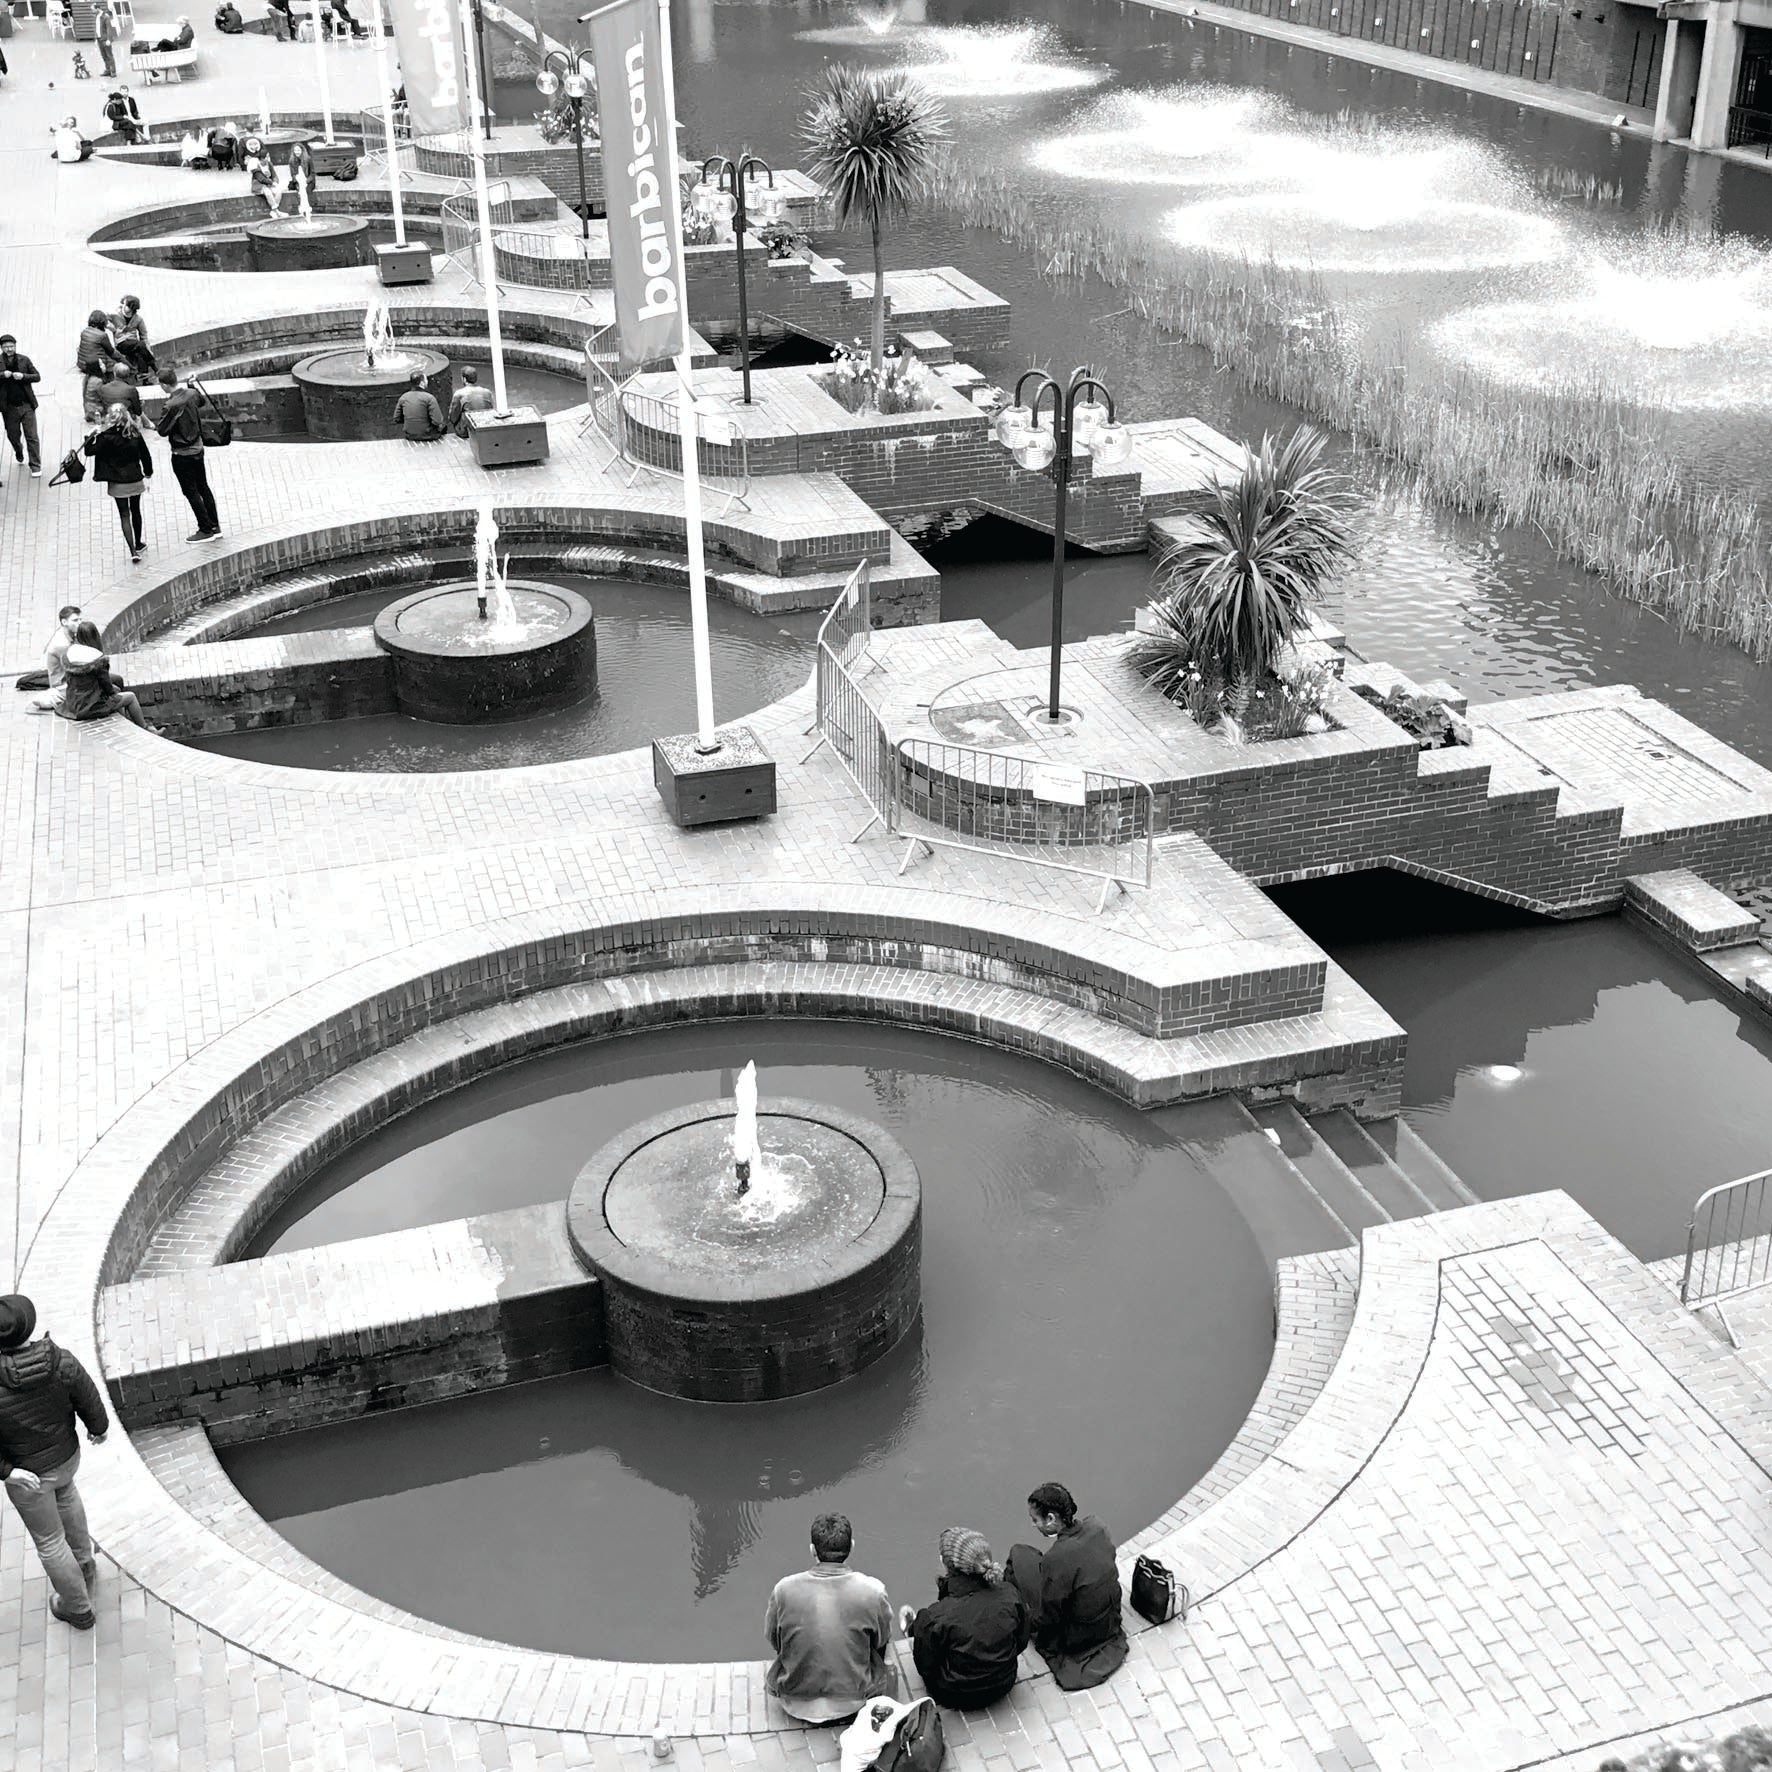 The Fountains Barbican Center